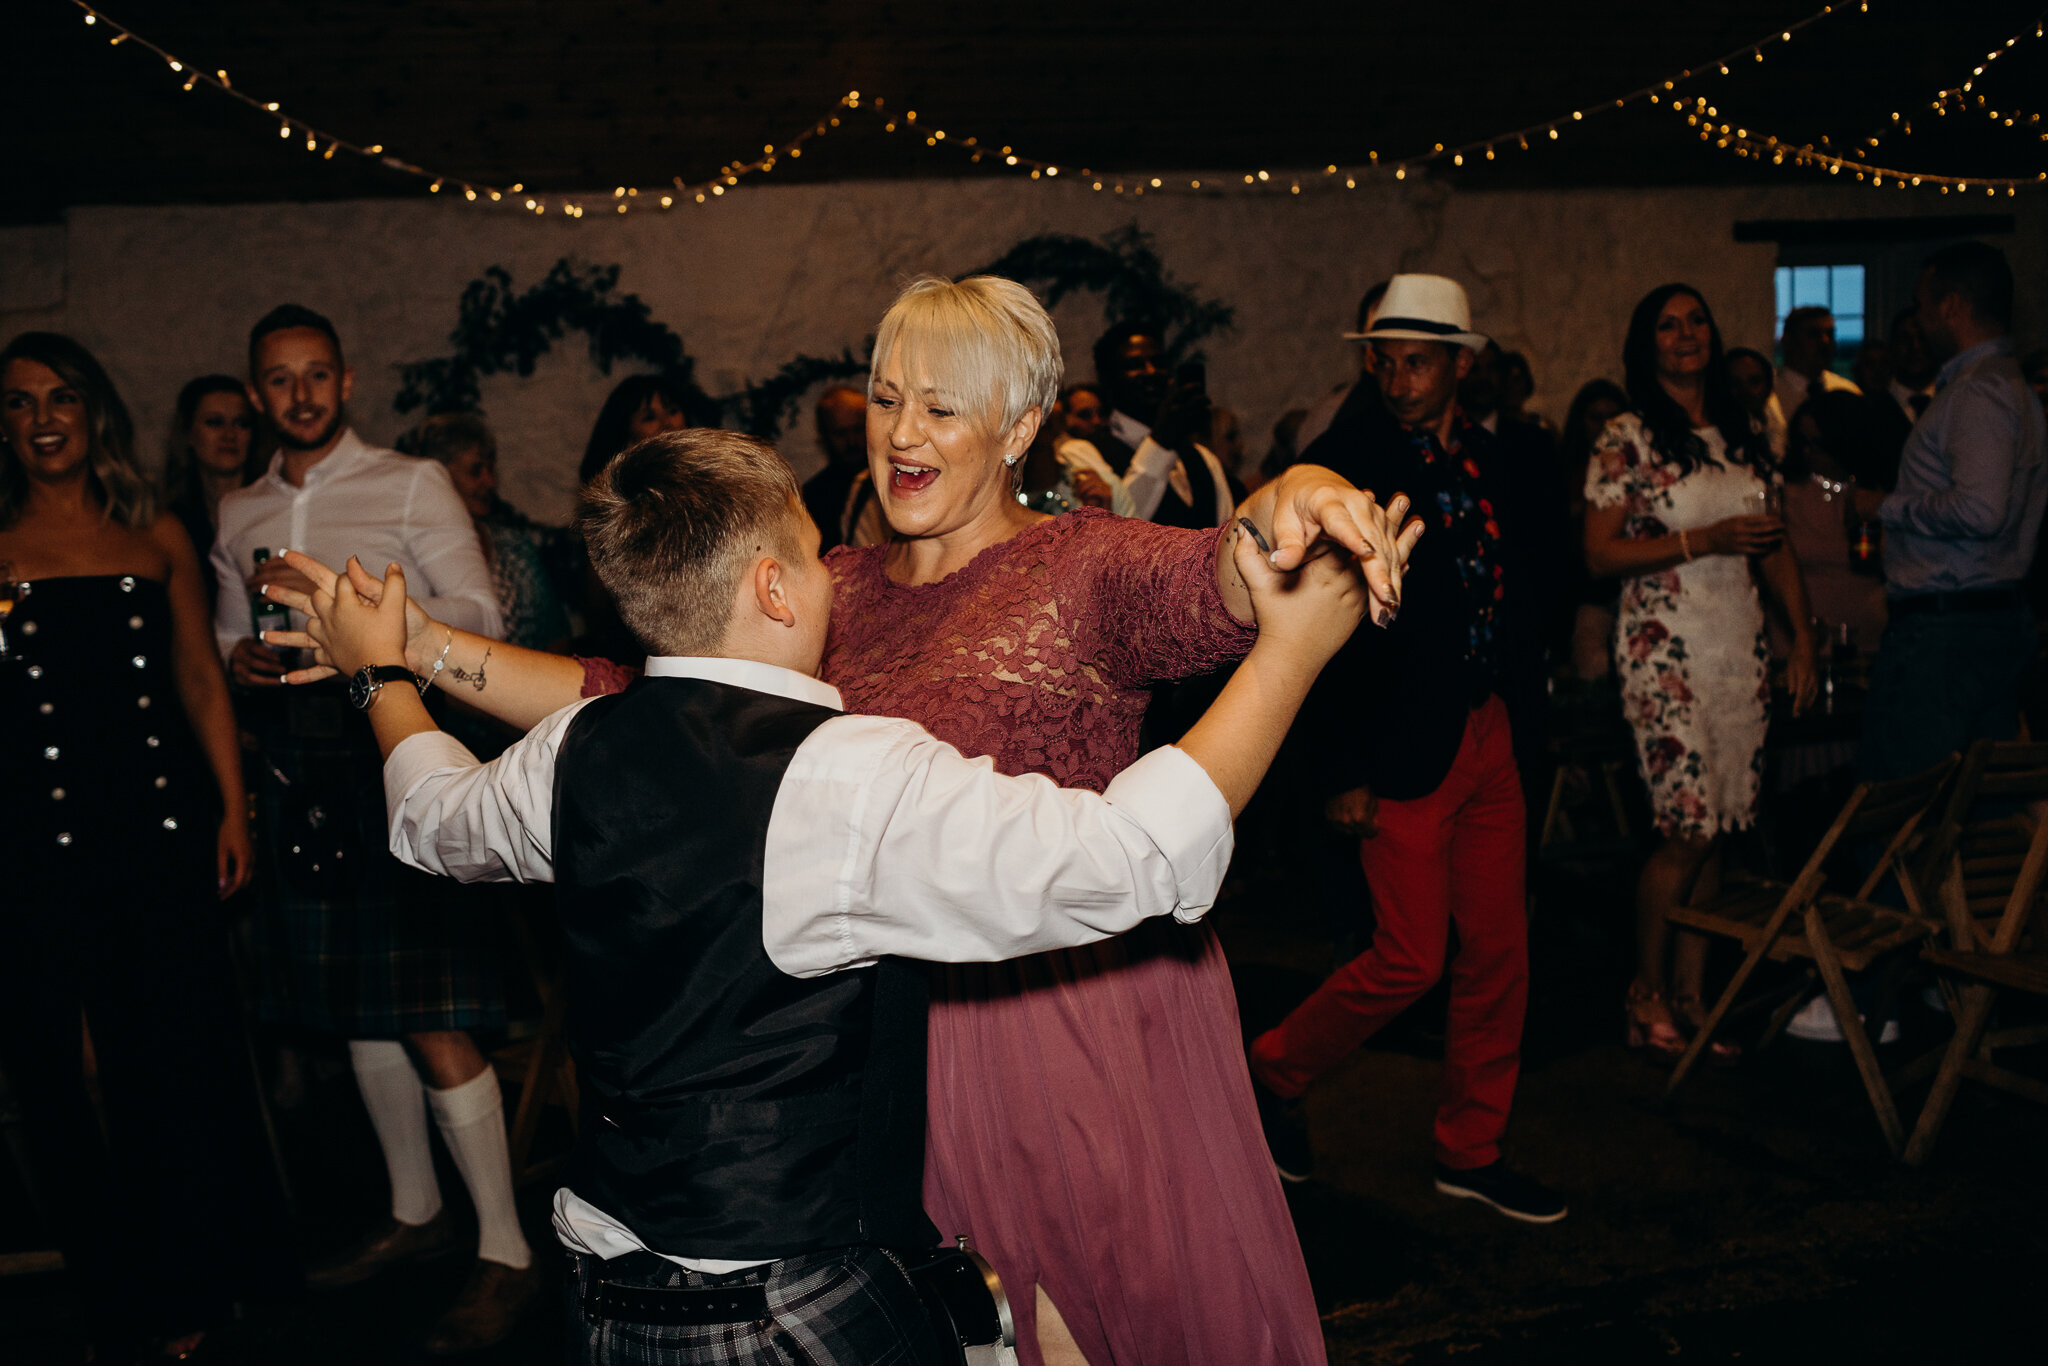 guests dancing at night at barn wedding dance at dalduff farm photographed by wedding photographer ayrshire Scotland